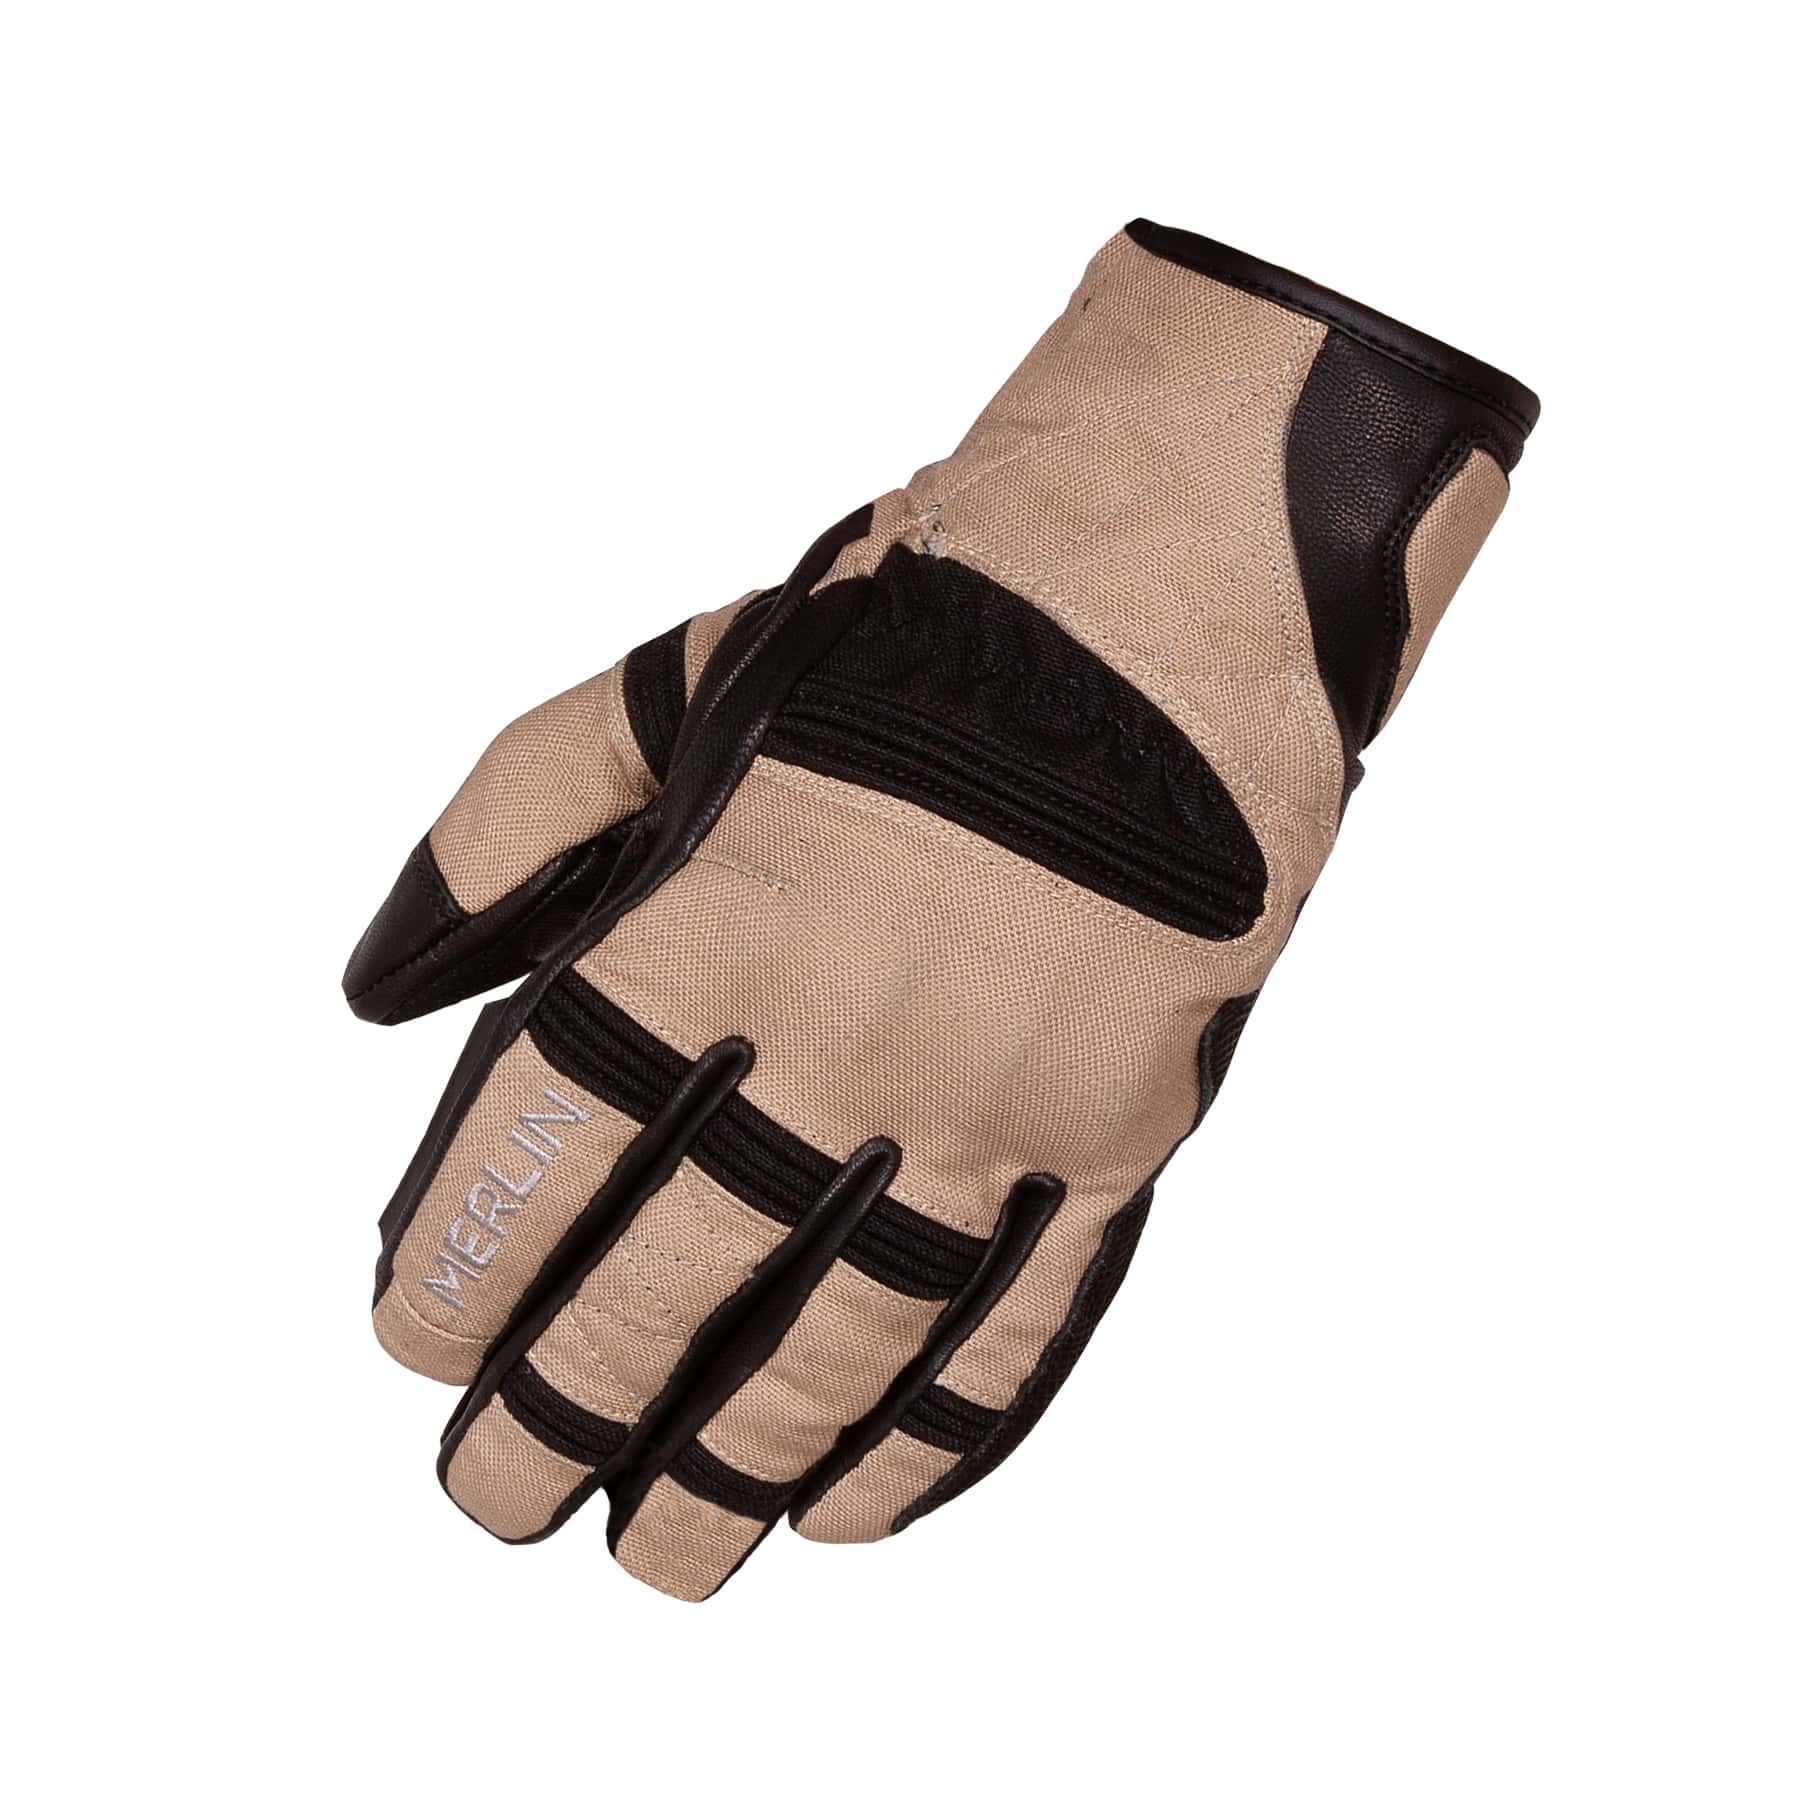 Merlin Mahala WP glove in sand